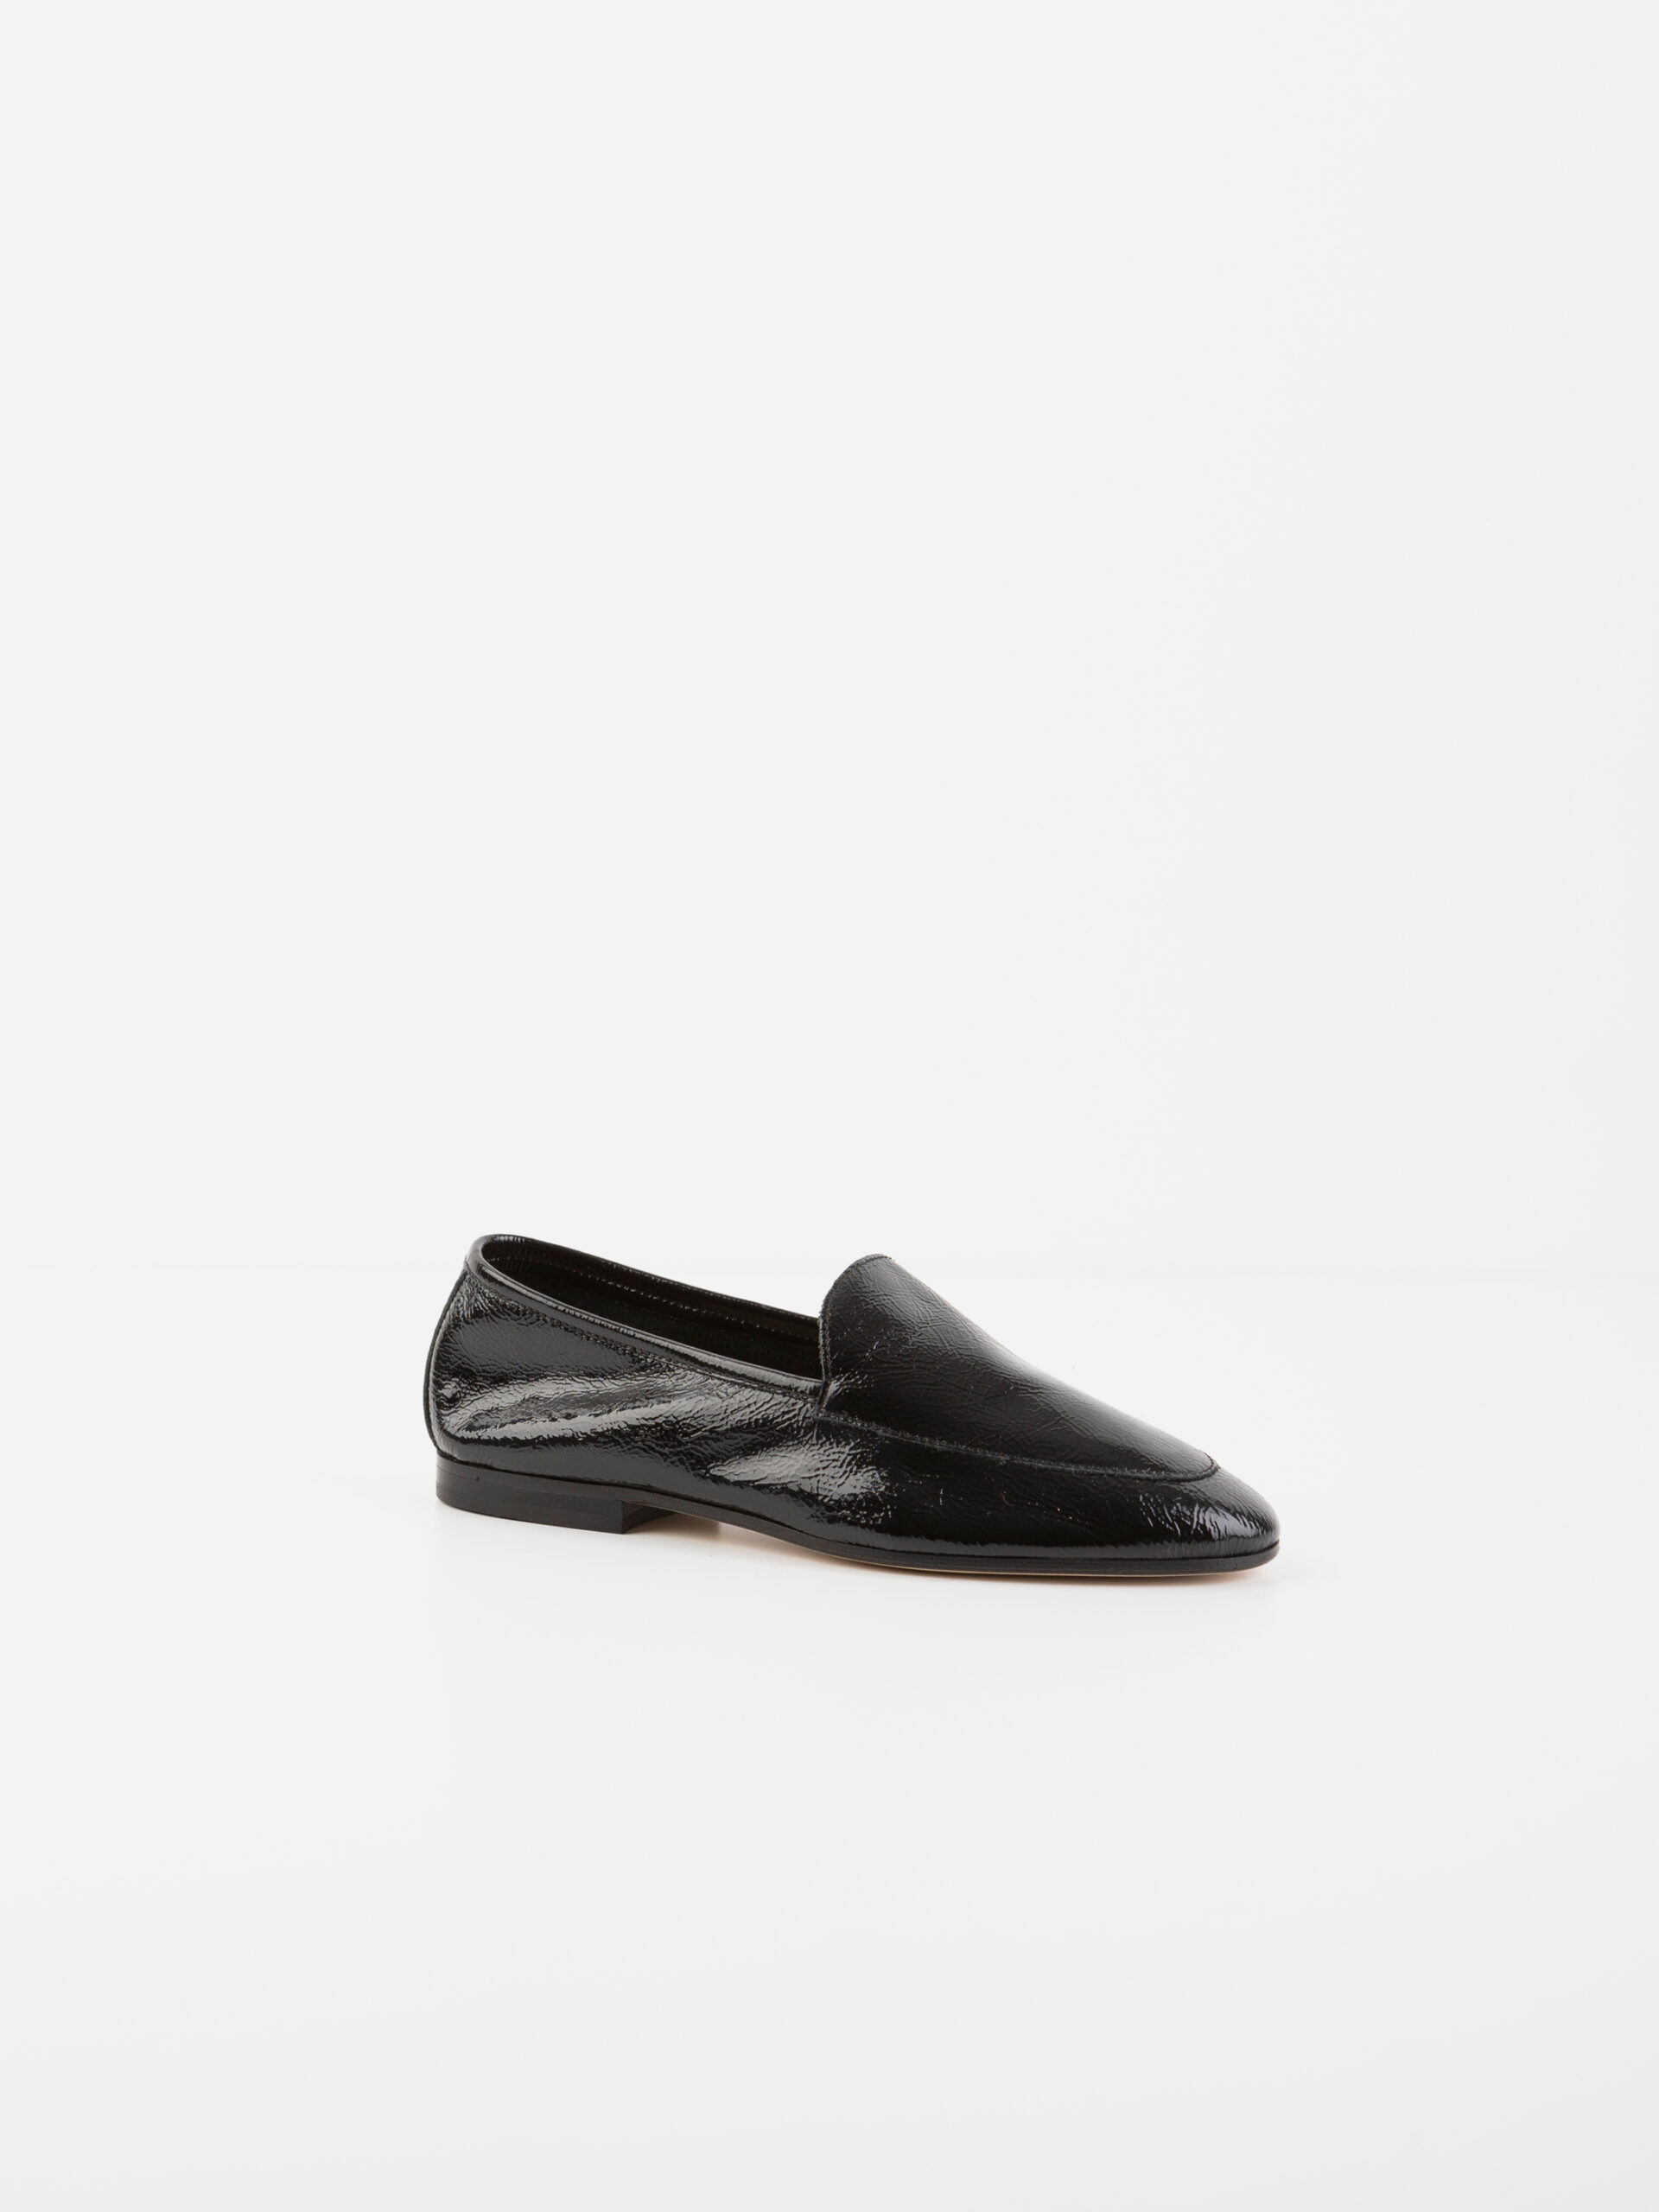 vern-loafers-shiny-black-leather-shoes-anniel-matchboxathens